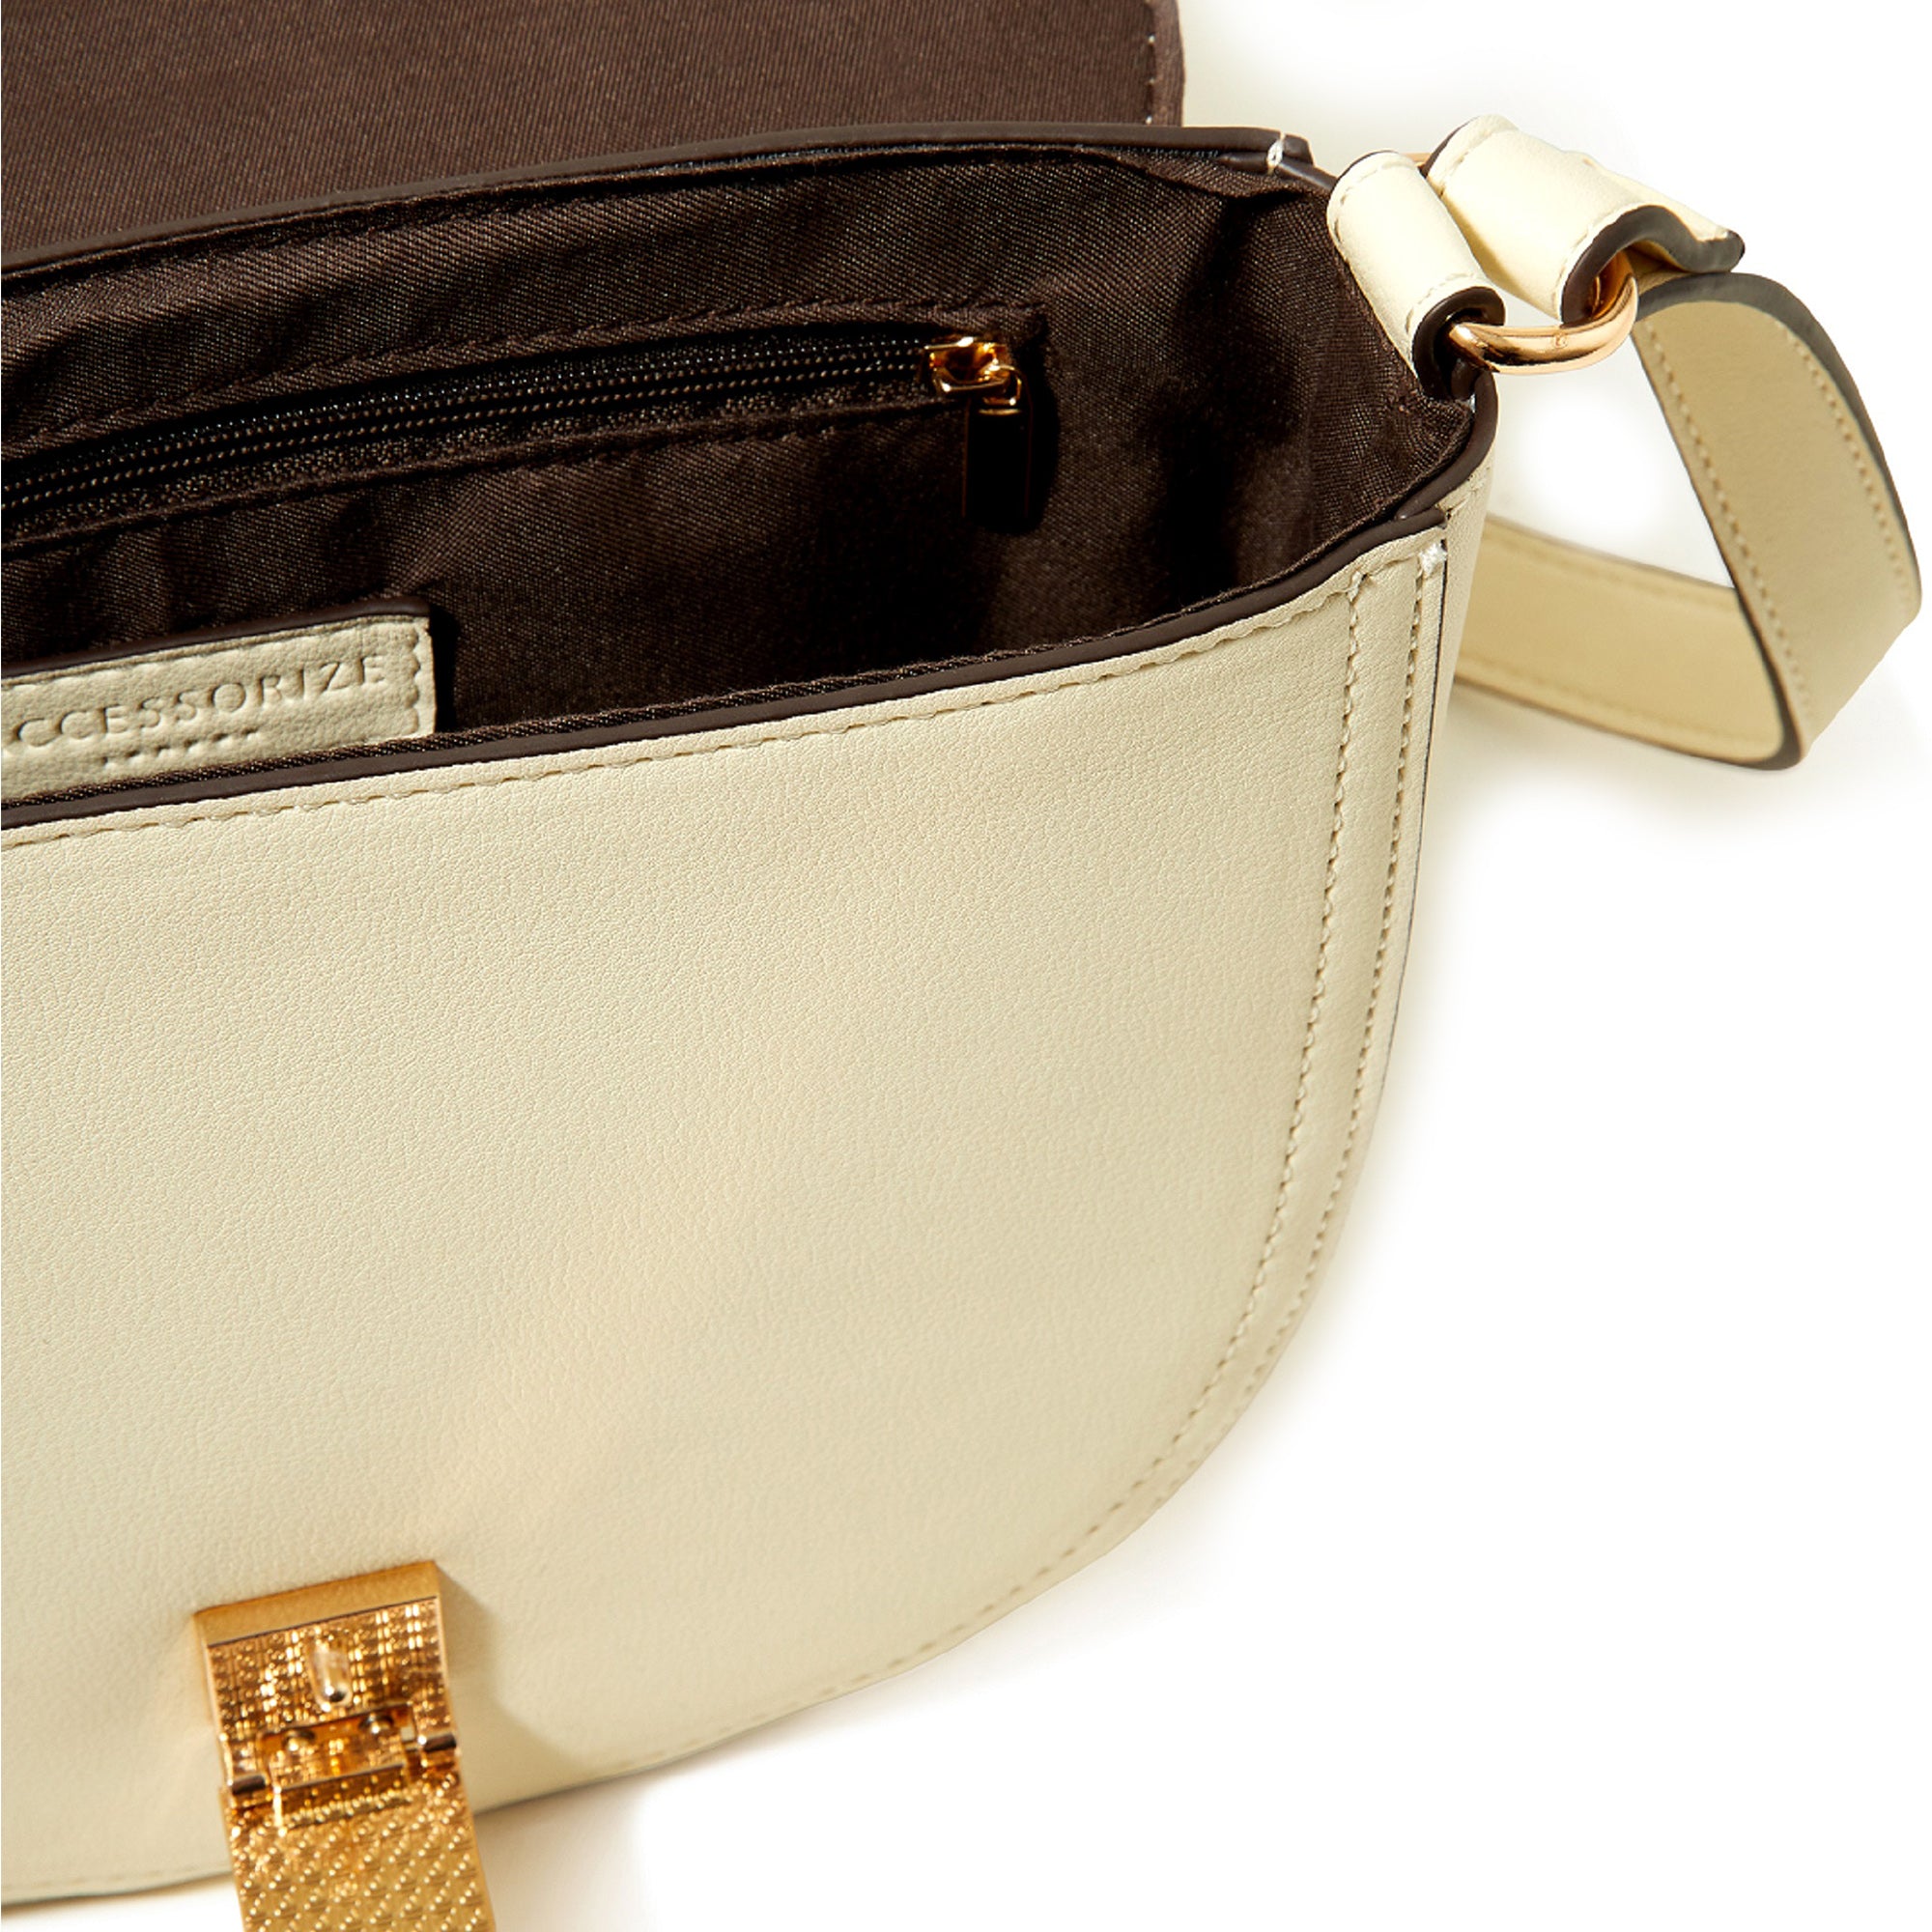 Accessorize London women's Faux Leather Cream Weave Sling bag